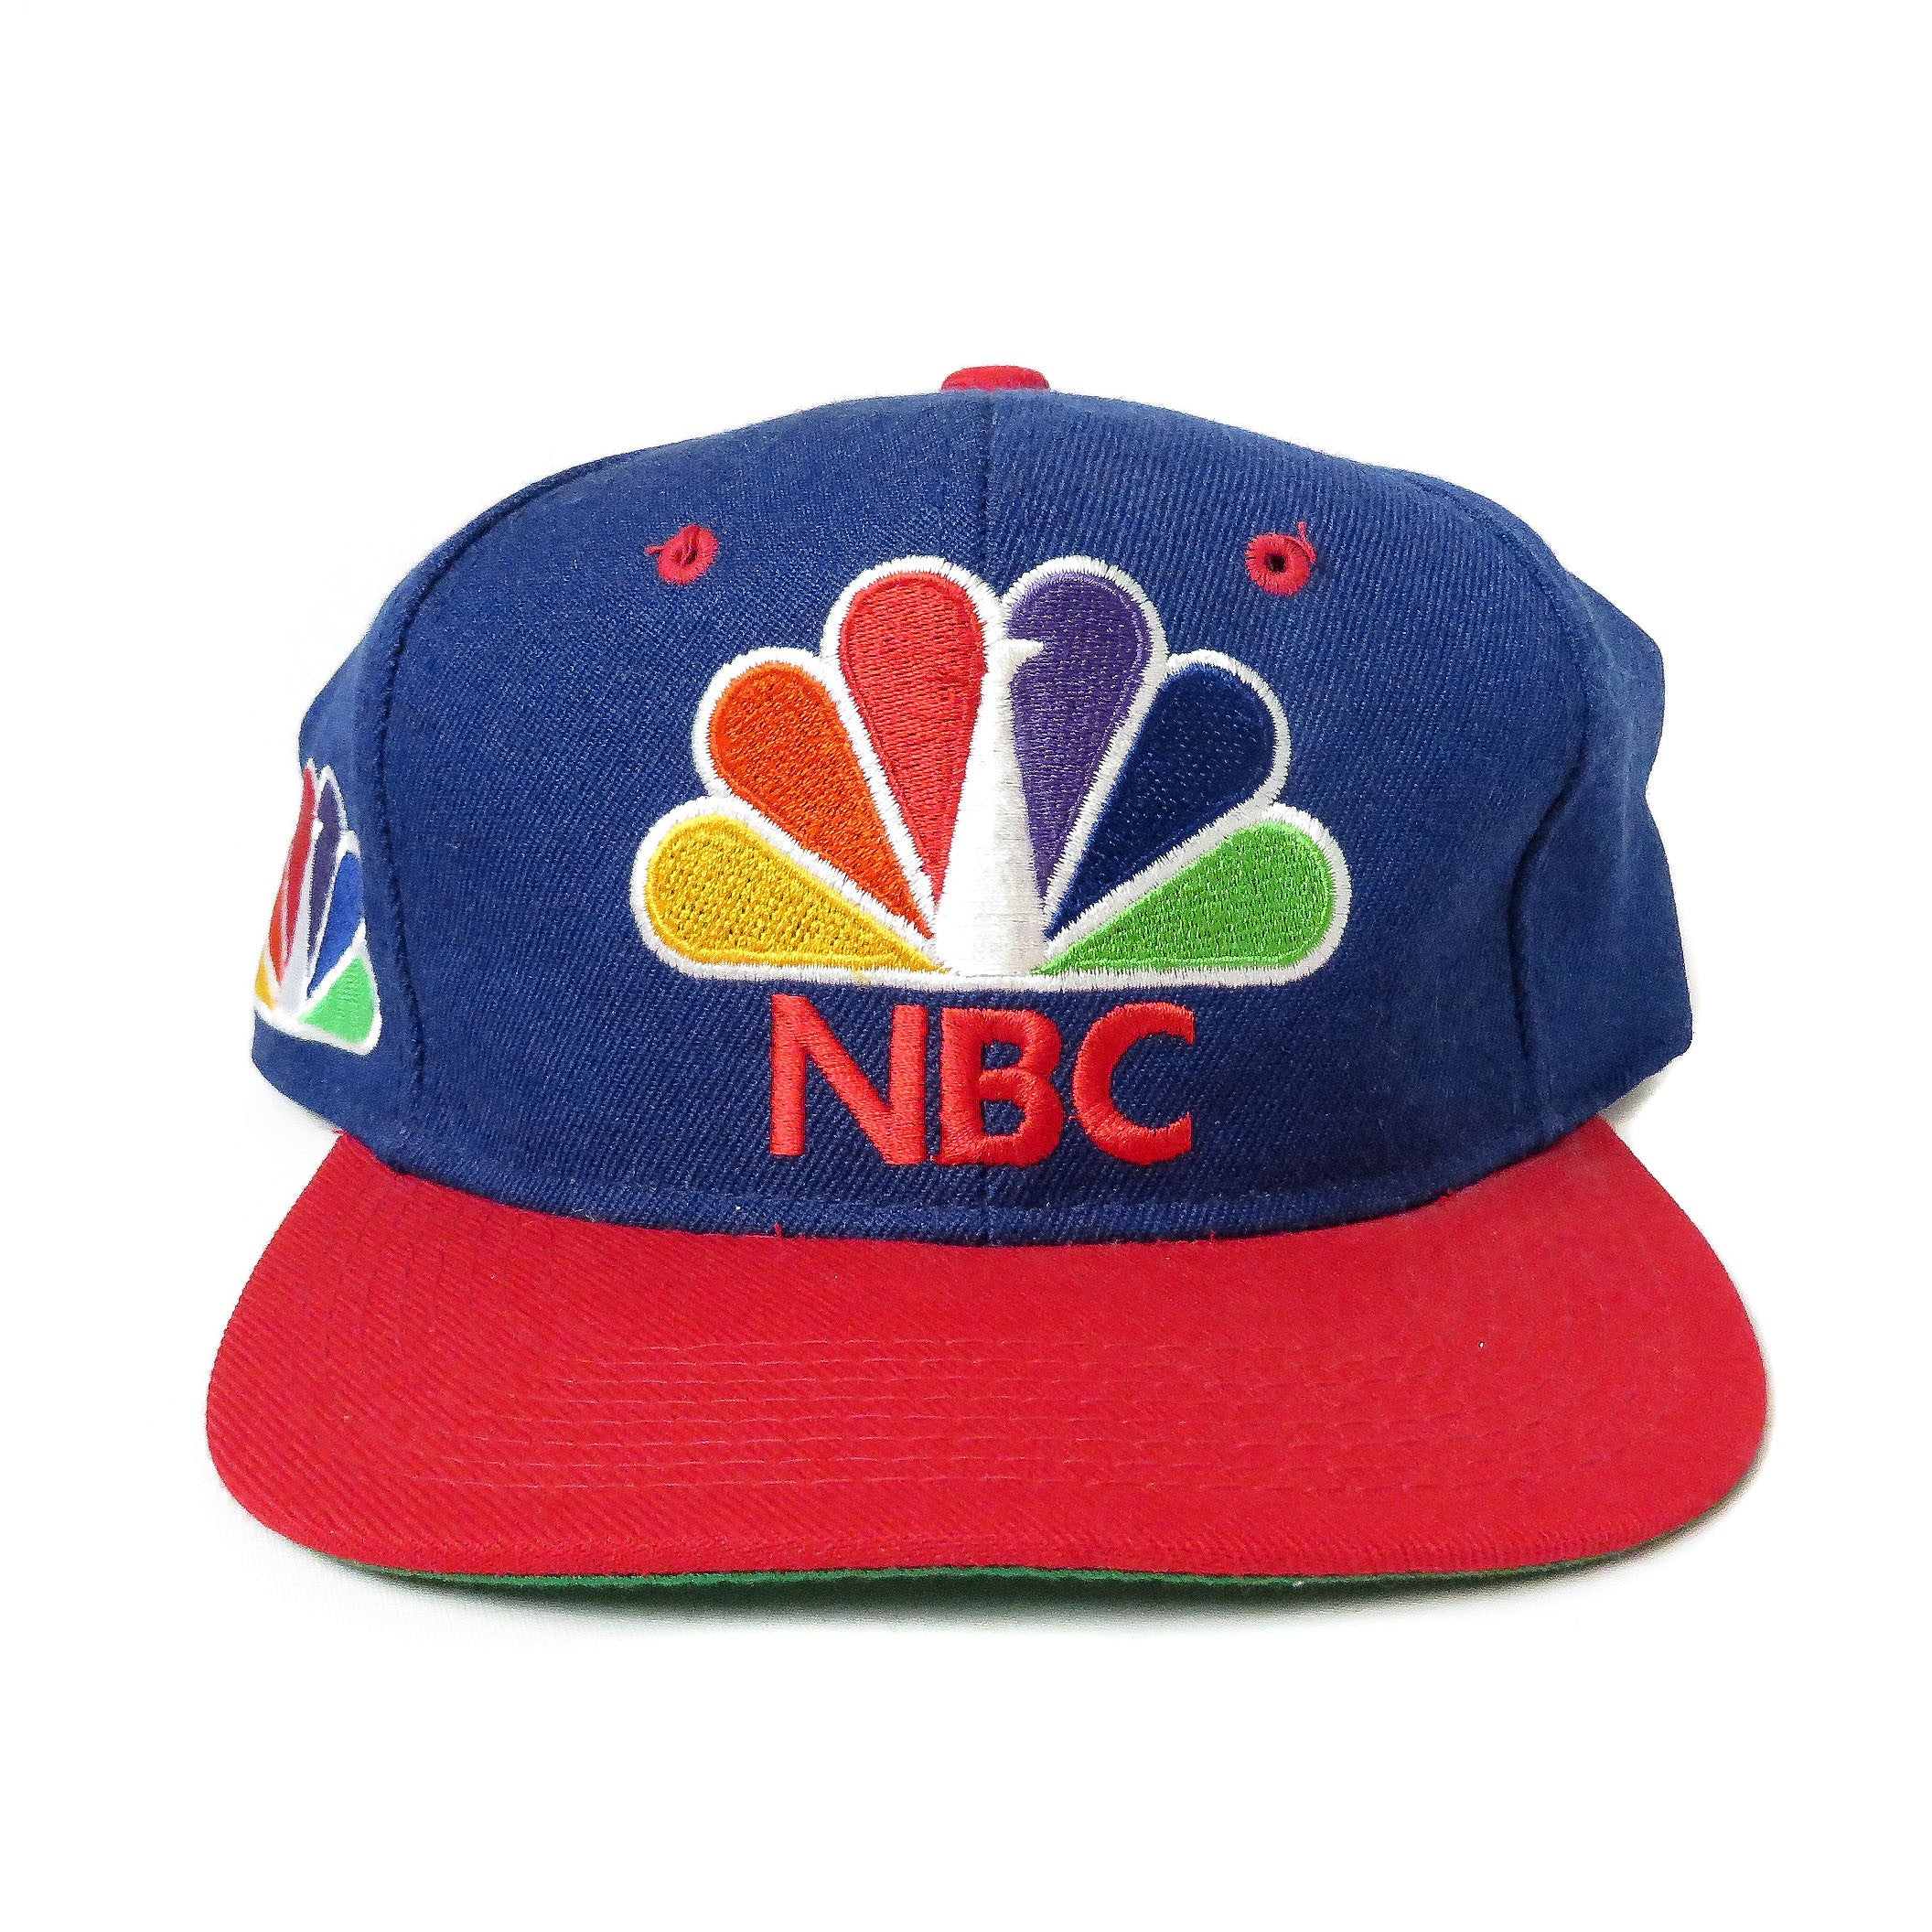 Vintage Sports Specialties NBC Snapback Hat